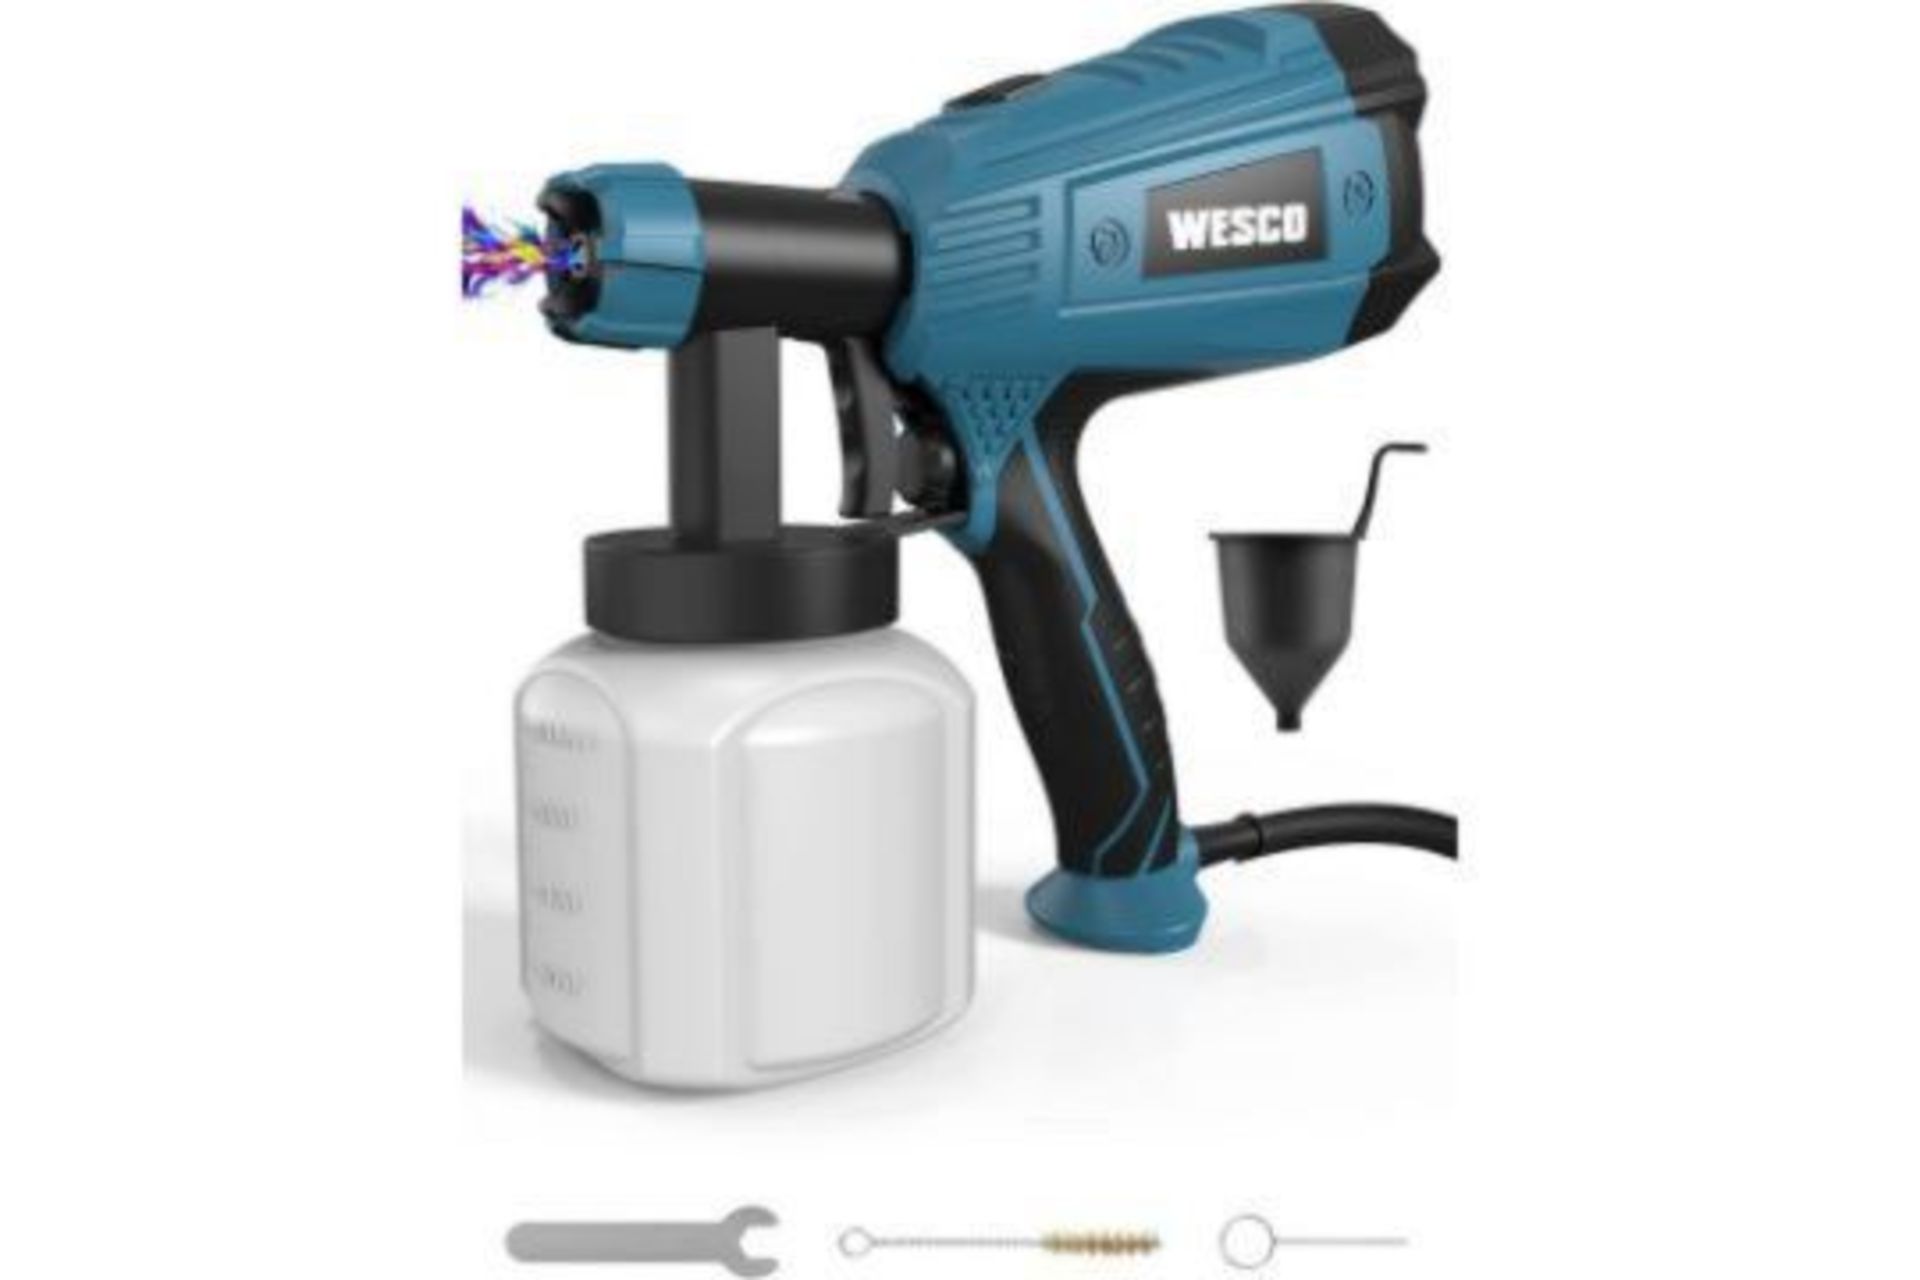 TRADE LOT 10 X NEW BOXED WESCO Paint Sprayer, WESCO 500W DIY Electric Spray Gun with 3 Spray